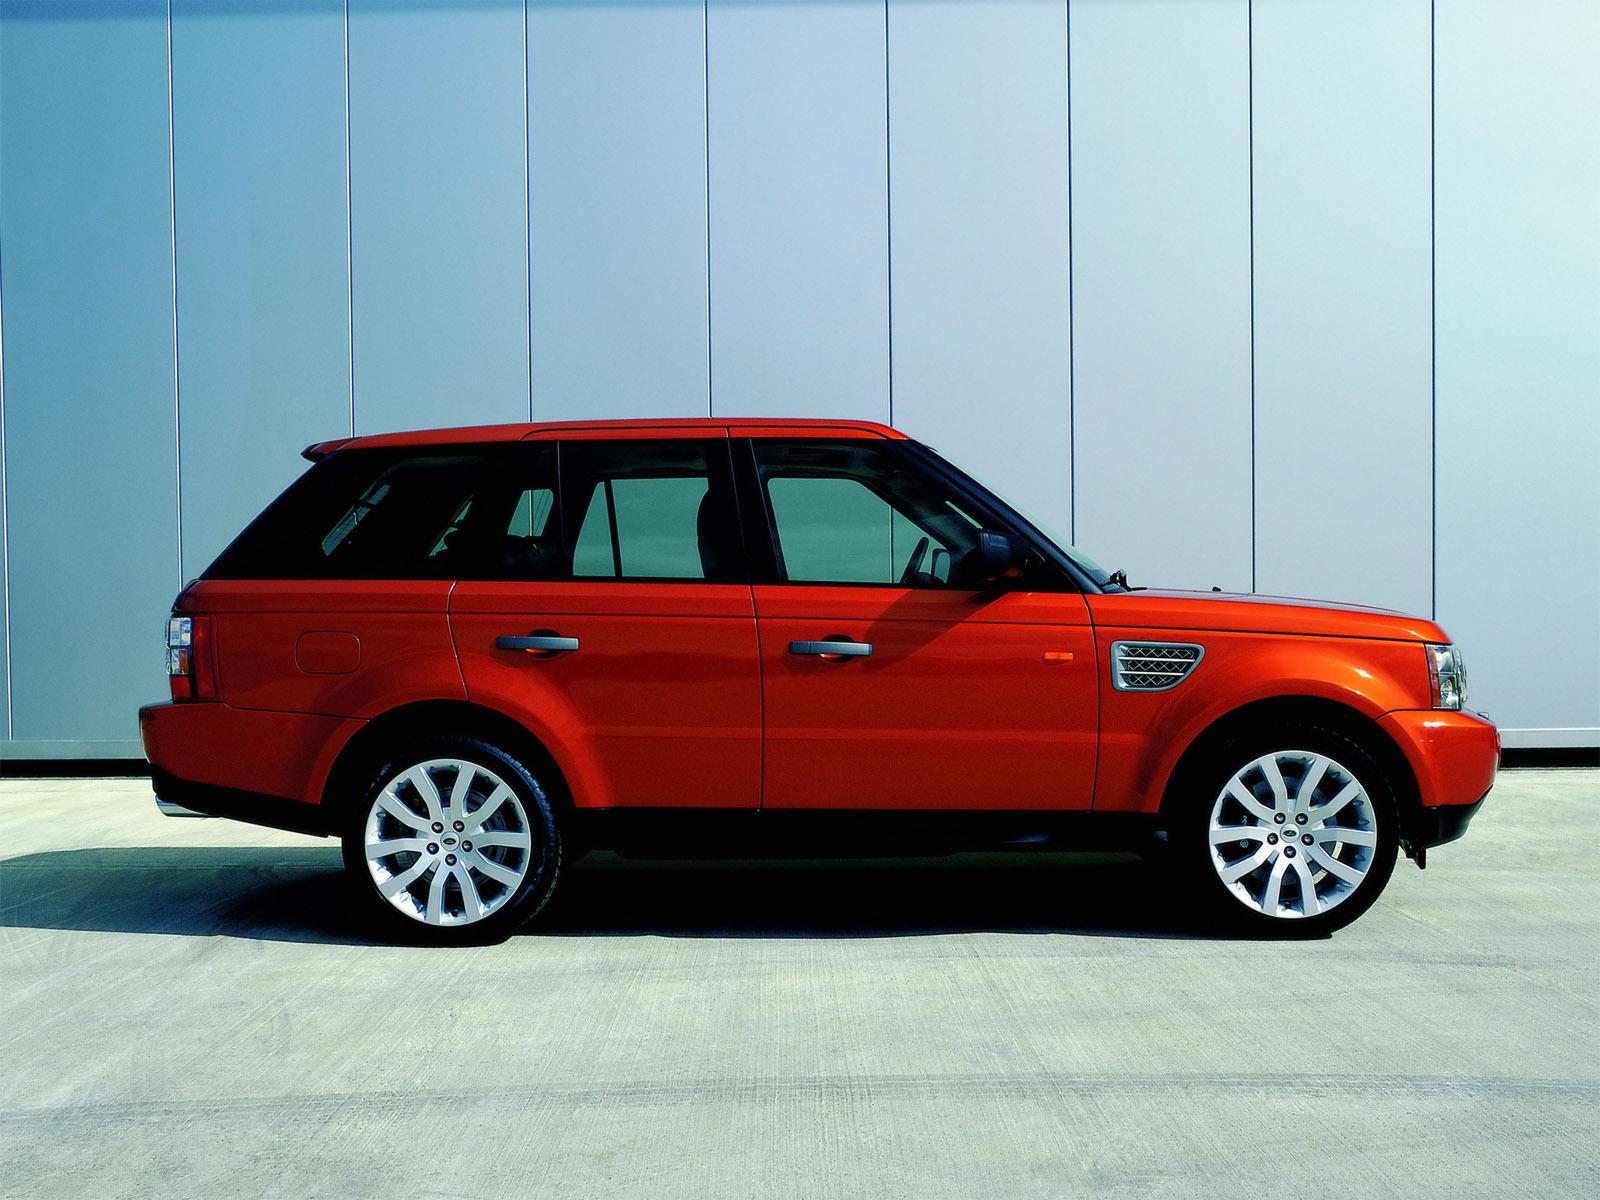 Range Rover Sport Windows 7 Cars Desktop Wallpaper. Car Wallpaper